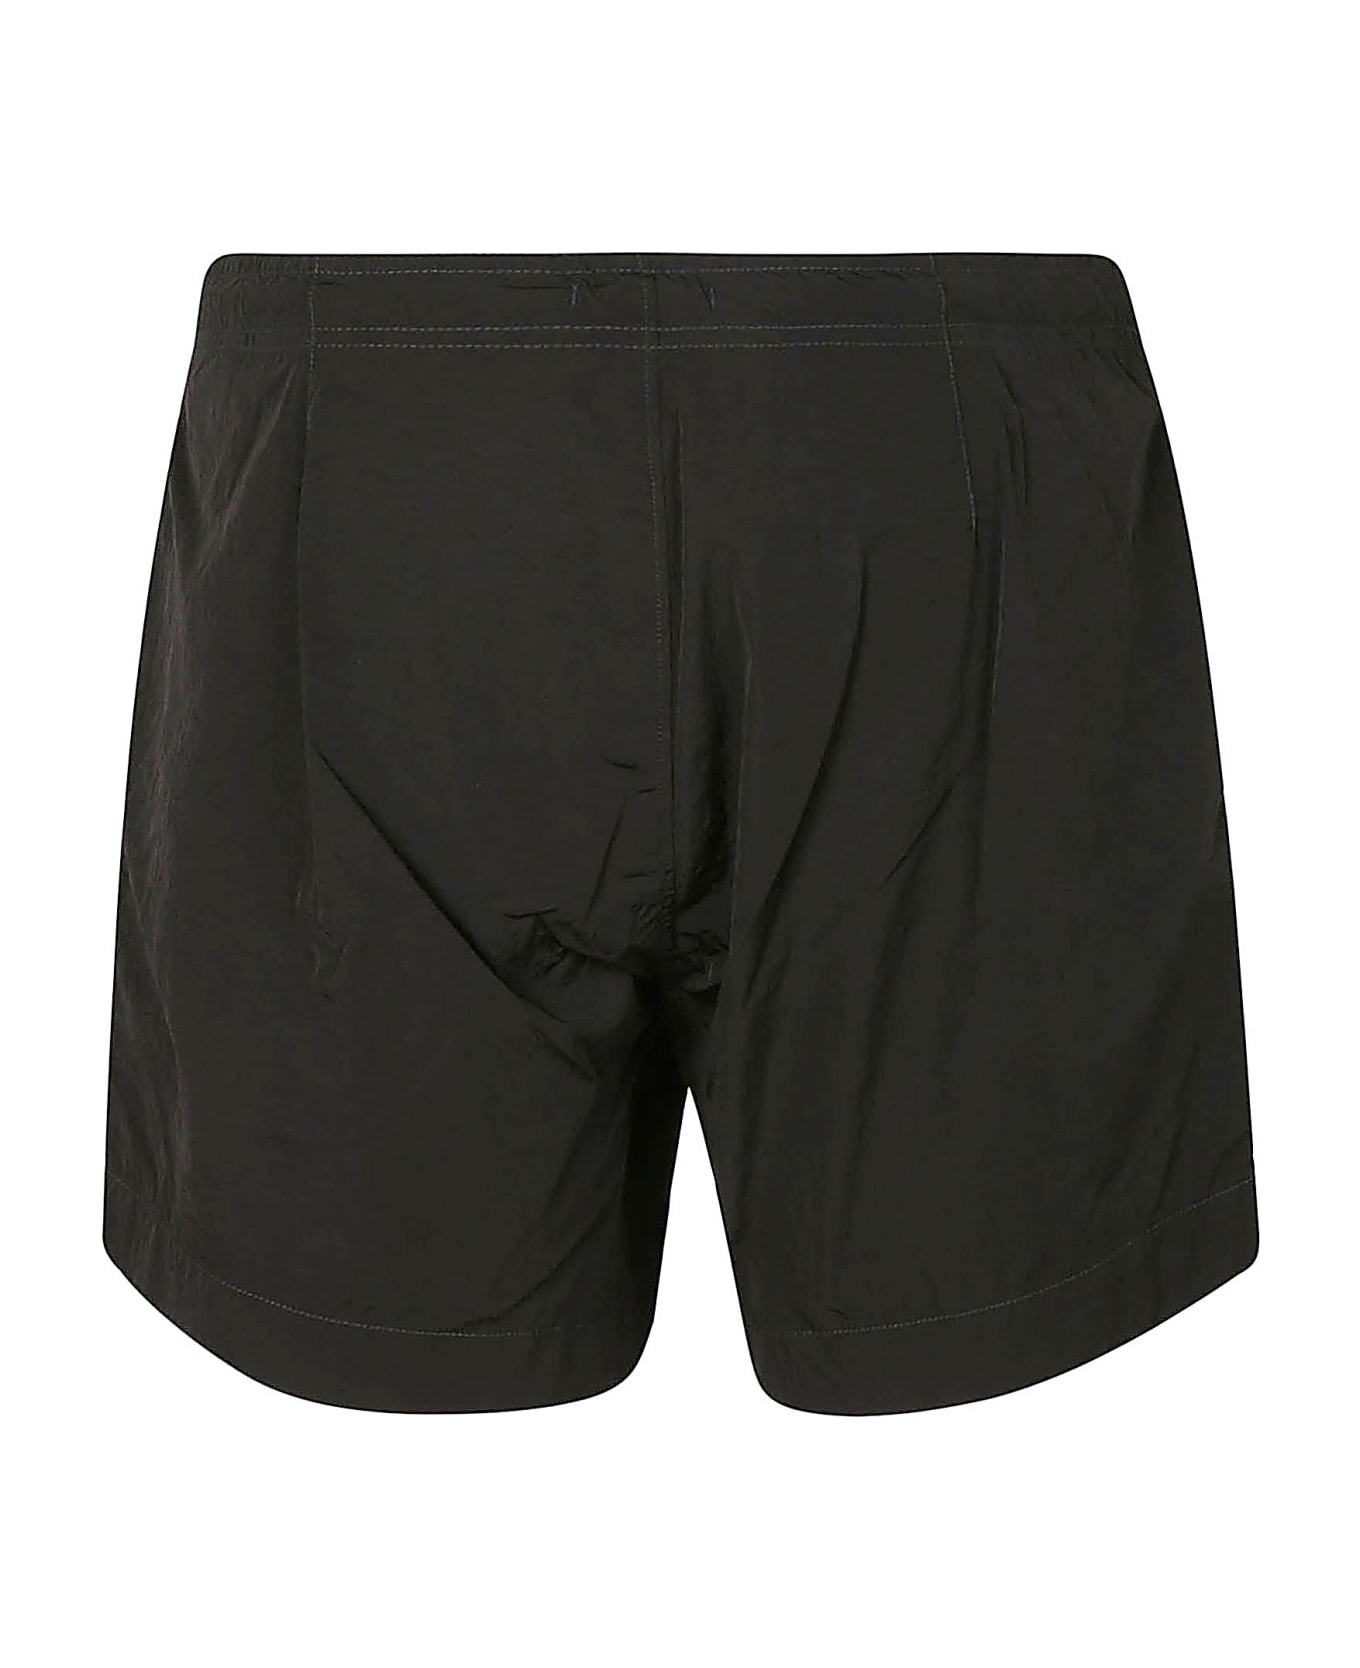 C.P. Company Eco-chrome R Boxer Shorts - Black